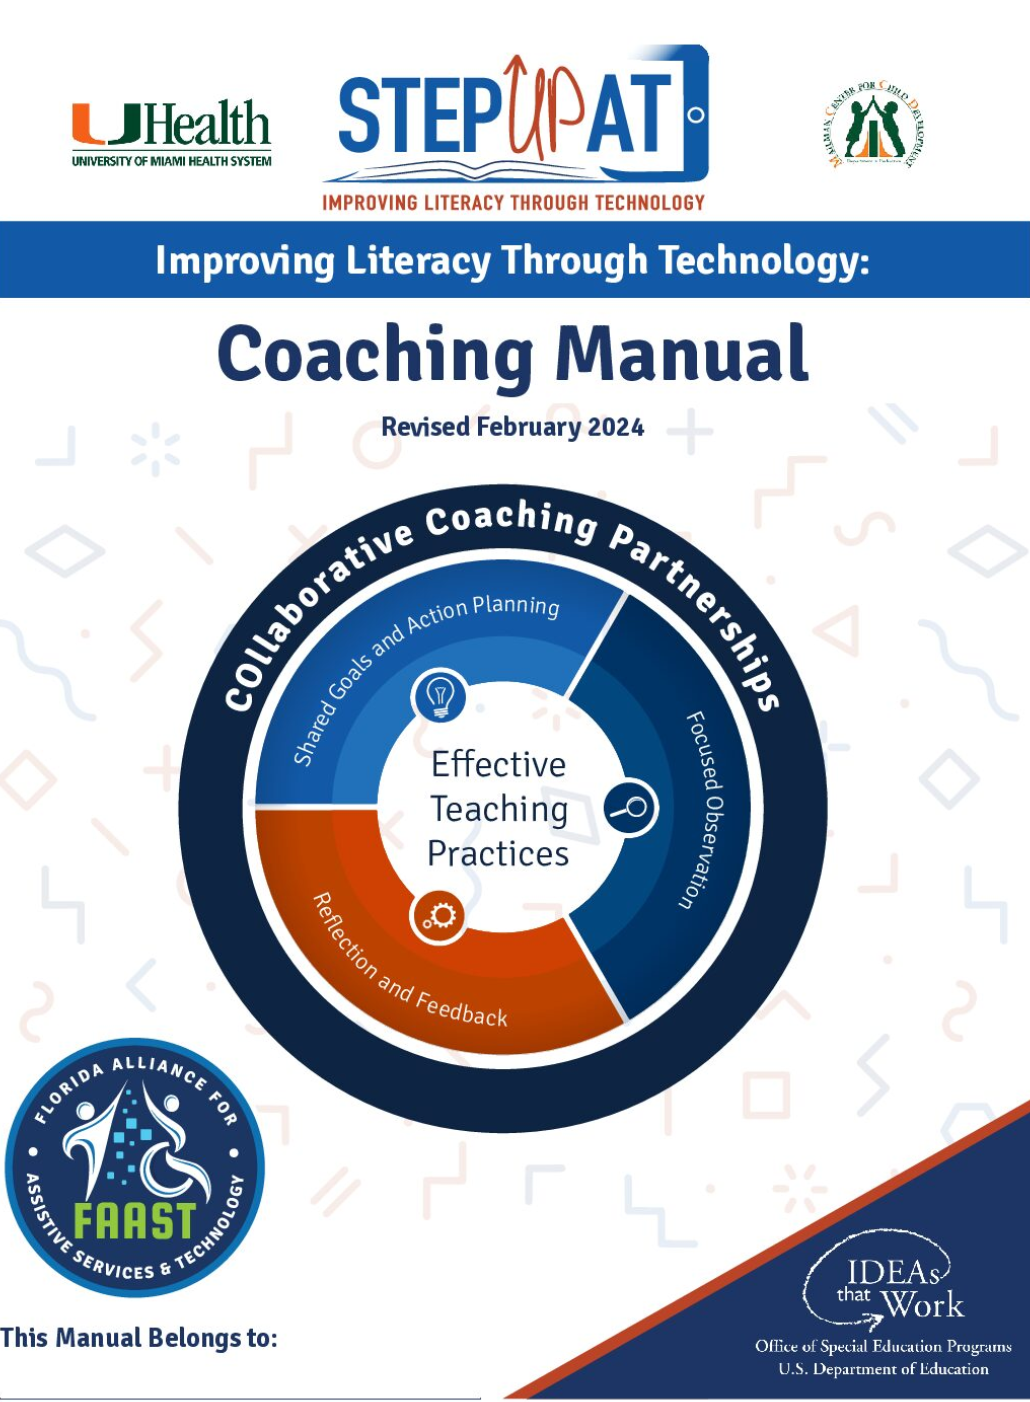 Screenshot of the Coaching Manual Revised February 2024